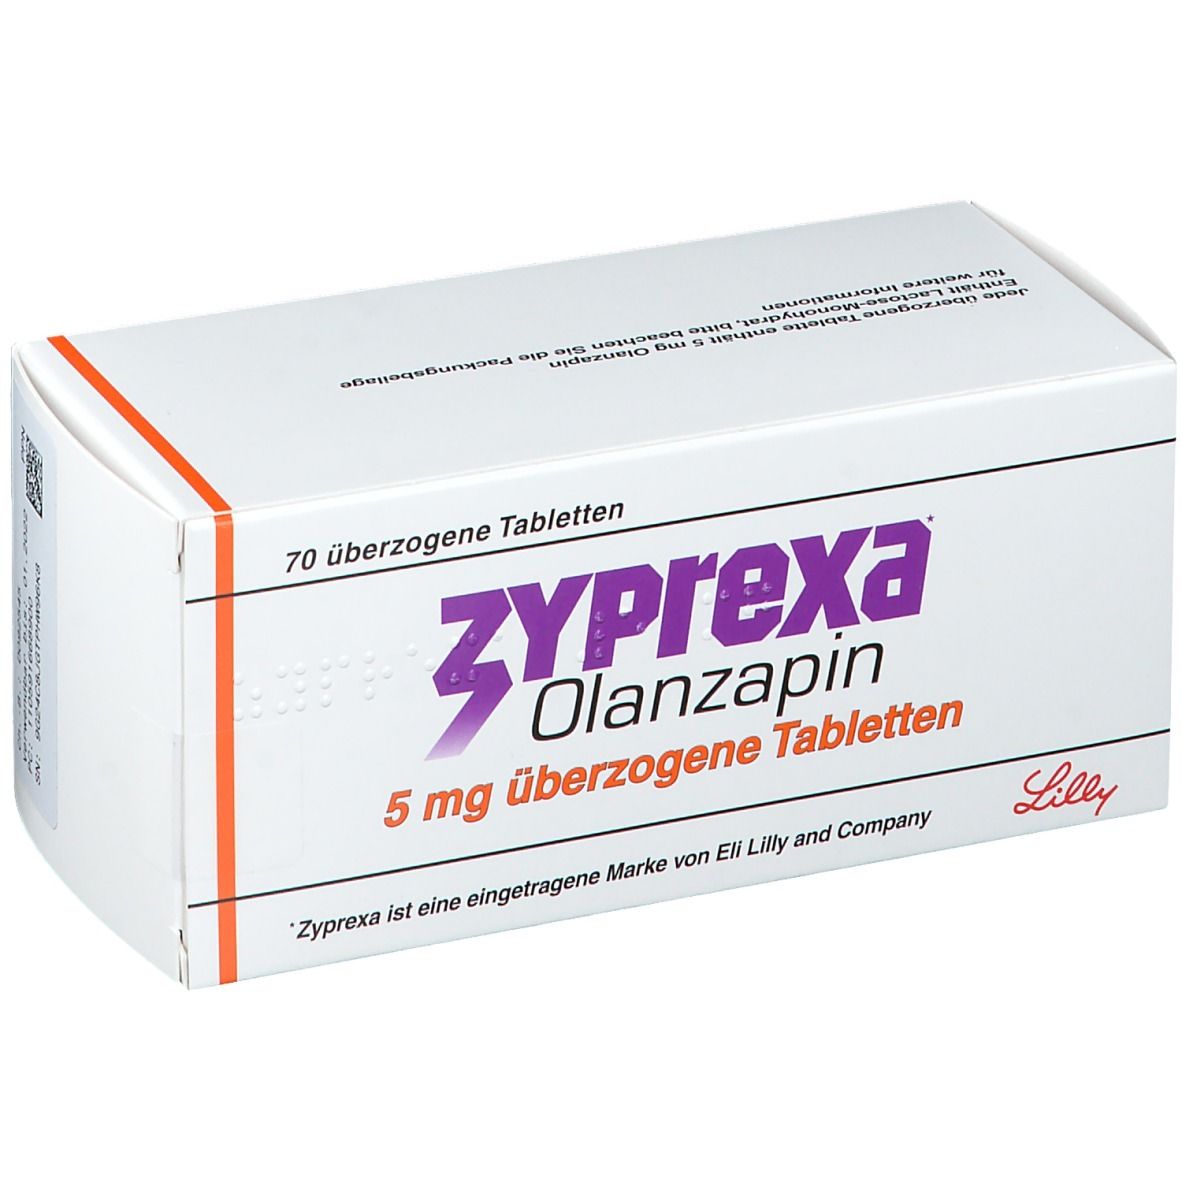 ZYPREXA 5 mg überzogene Tabletten